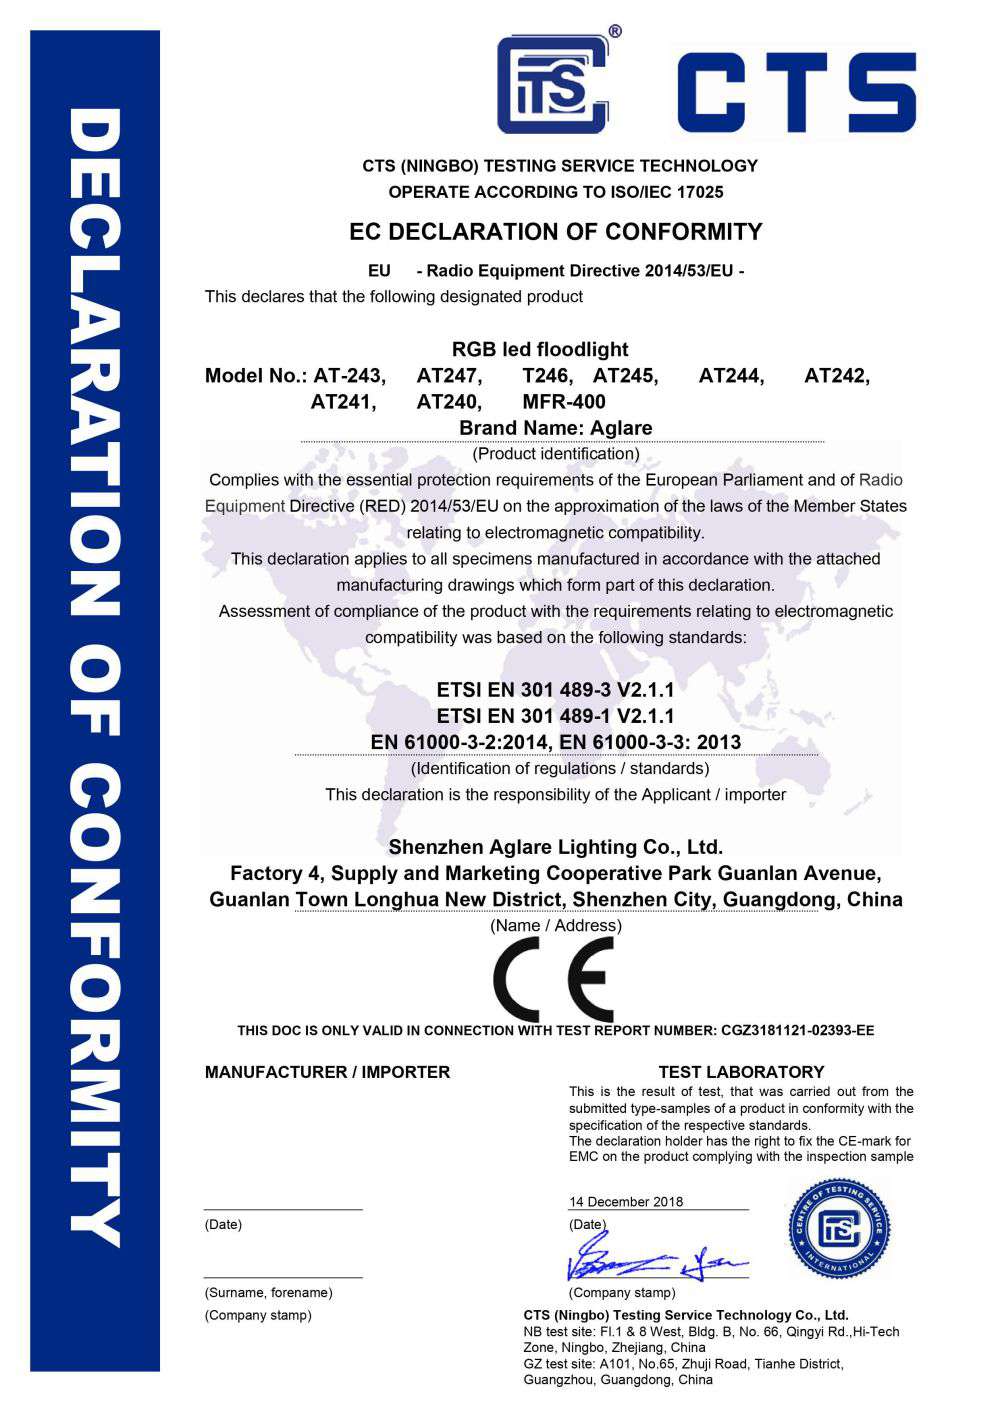 CTS-RGB led floodlight-EMC （Remote Original certificate）